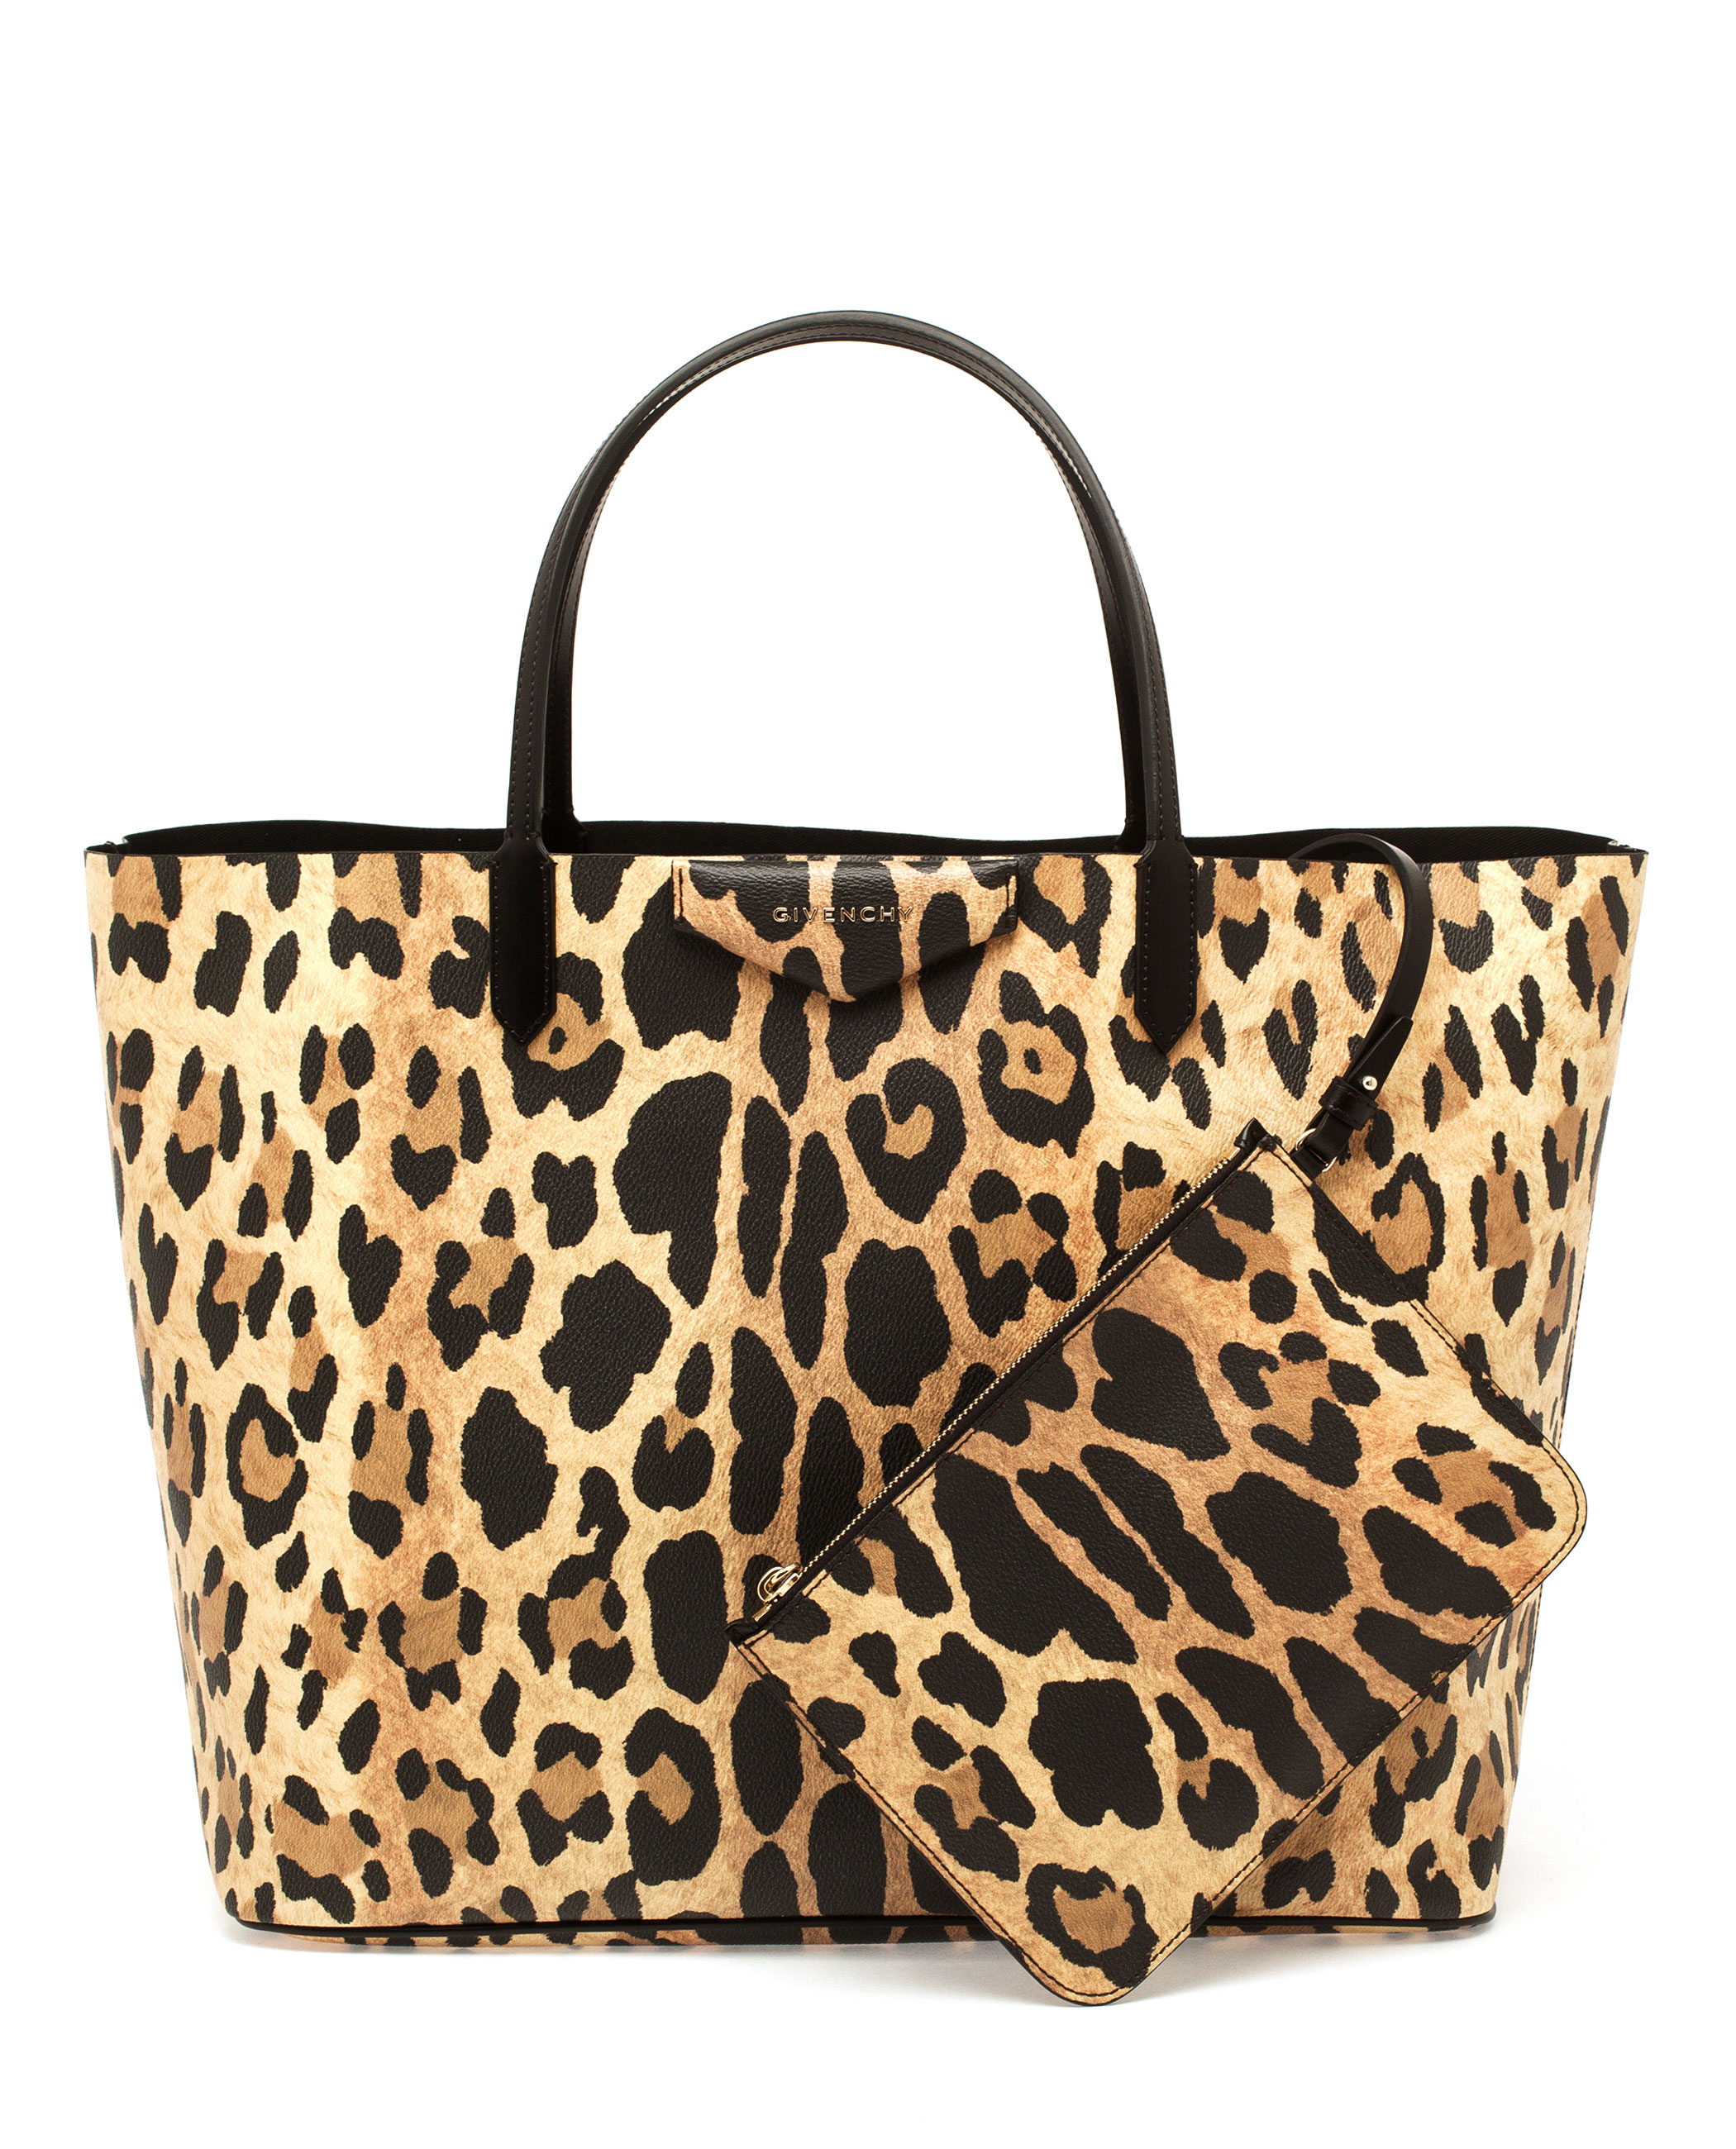 Lyst - Givenchy Mini 'lucrezia' Leopard Tote